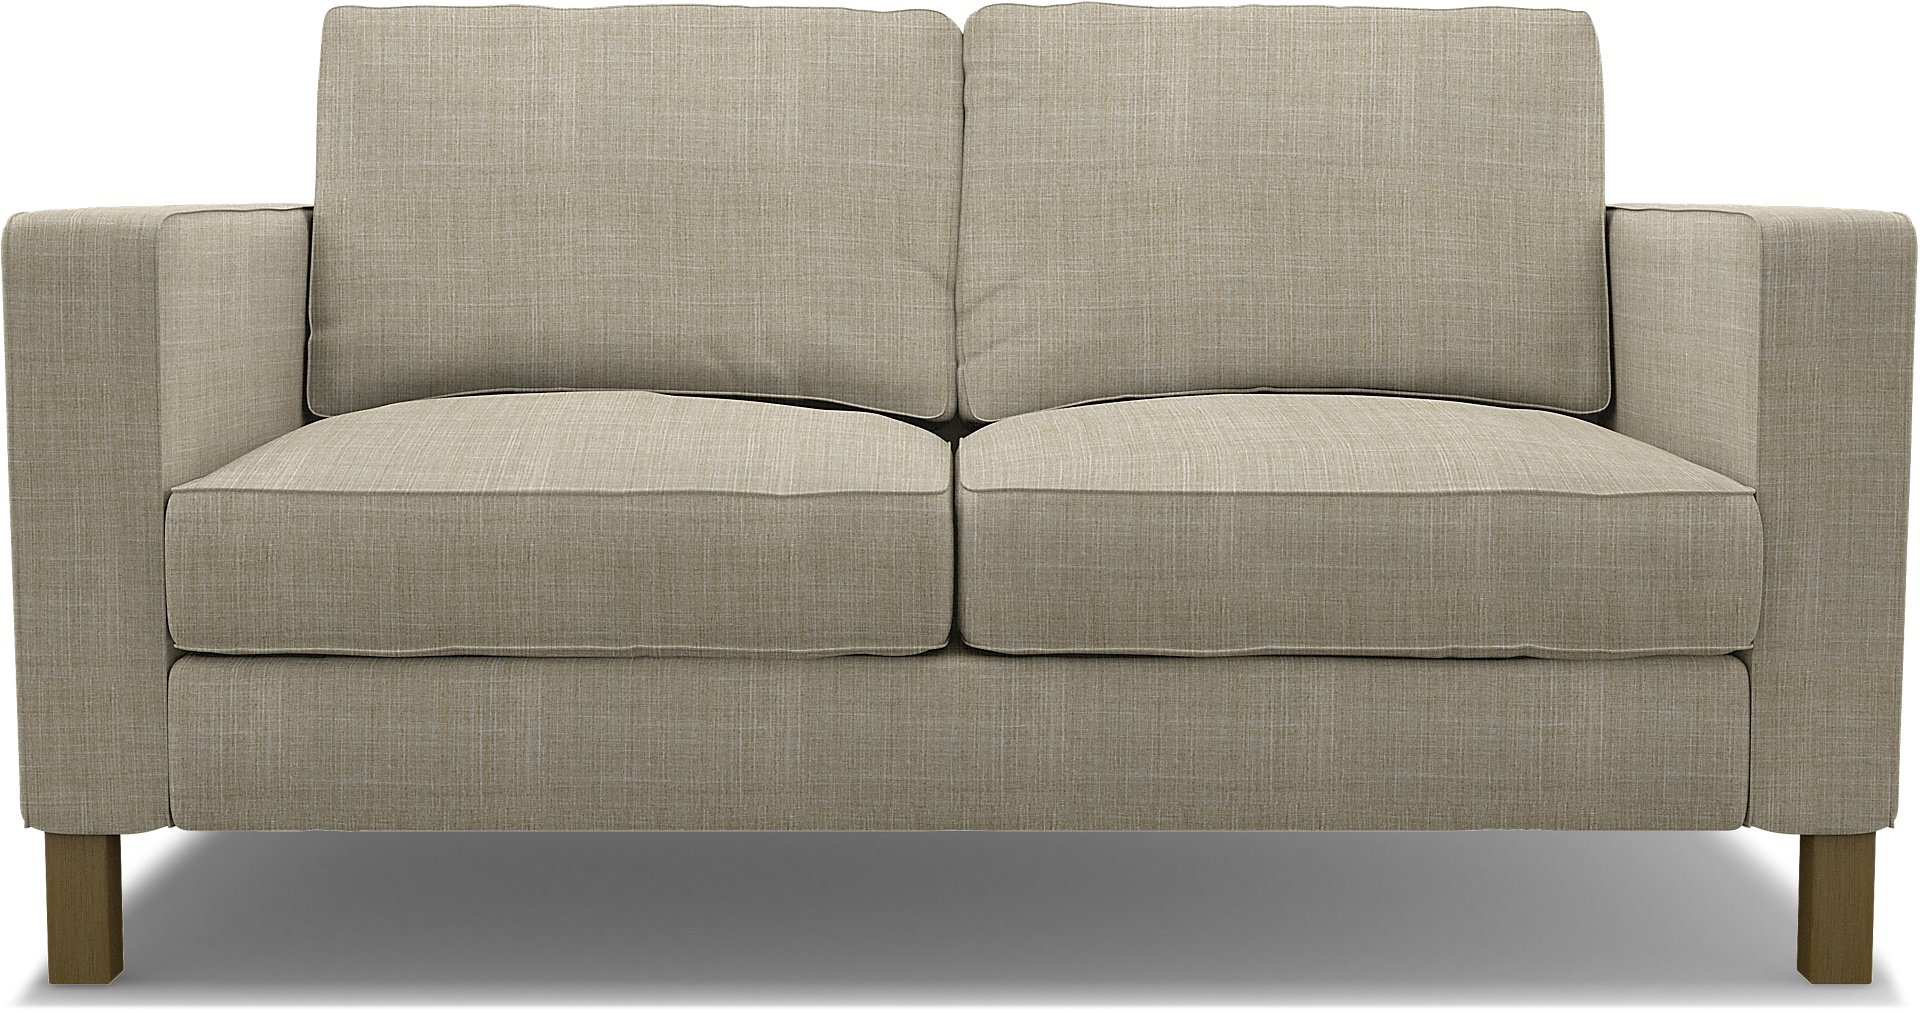 IKEA - Karlstad 2 Seater Sofa Cover, Sand Beige, Boucle & Texture - Bemz